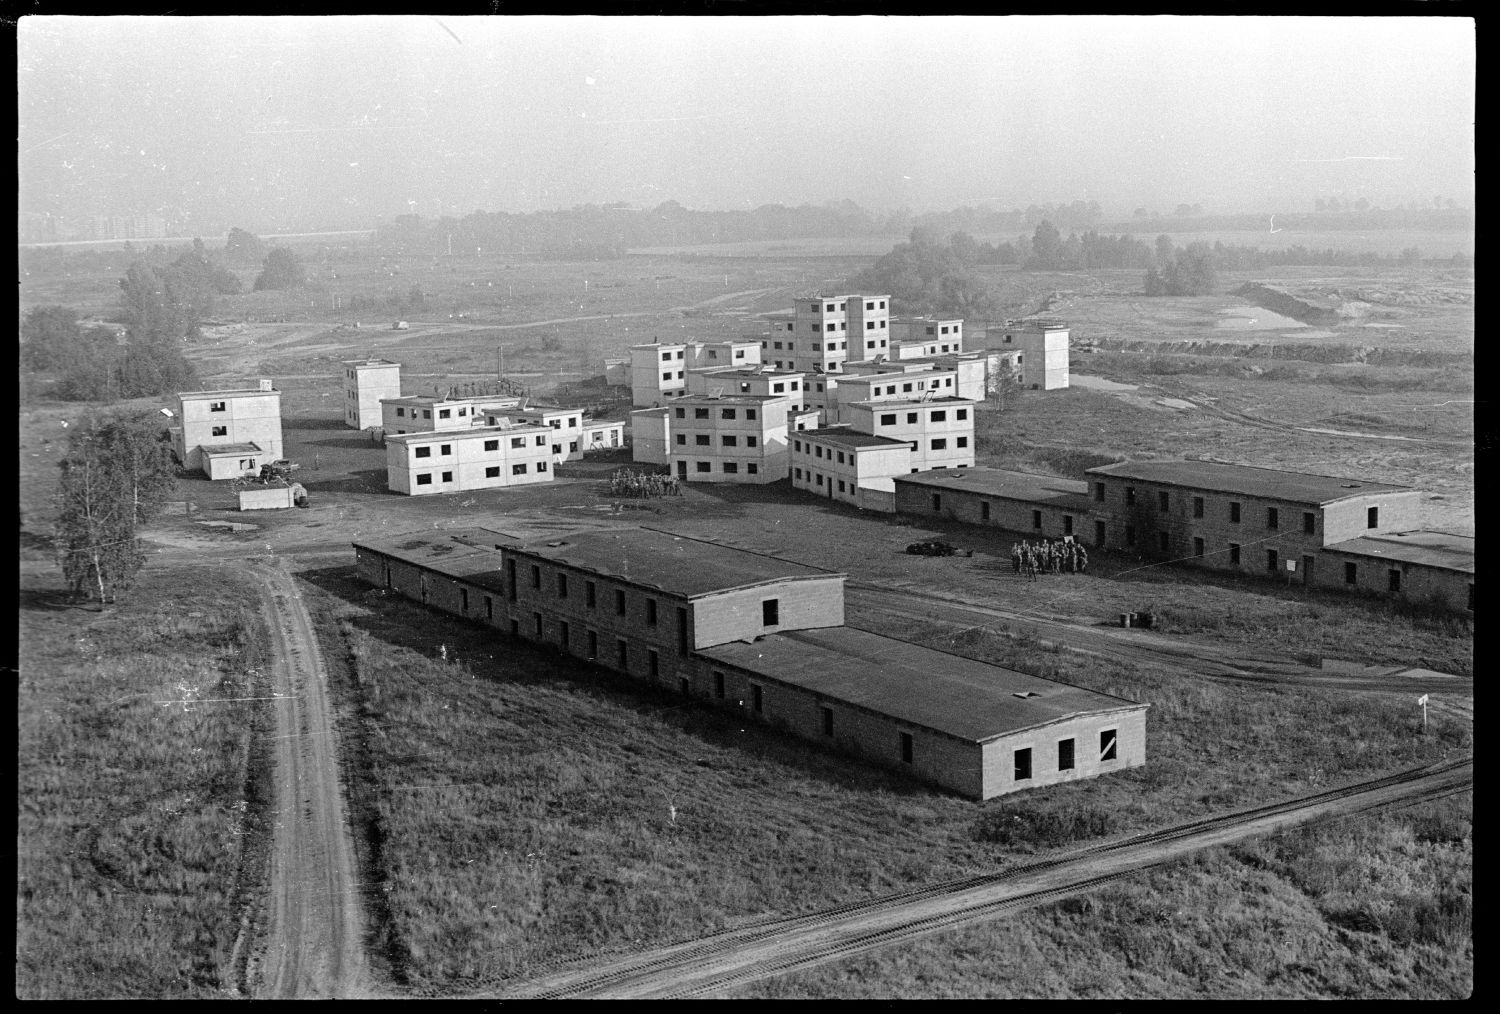 S/w-Fotografie: Truppenübungsplatz Parks Range der U.S. Army Berlin Brigade in Berlin-Lichterfelde